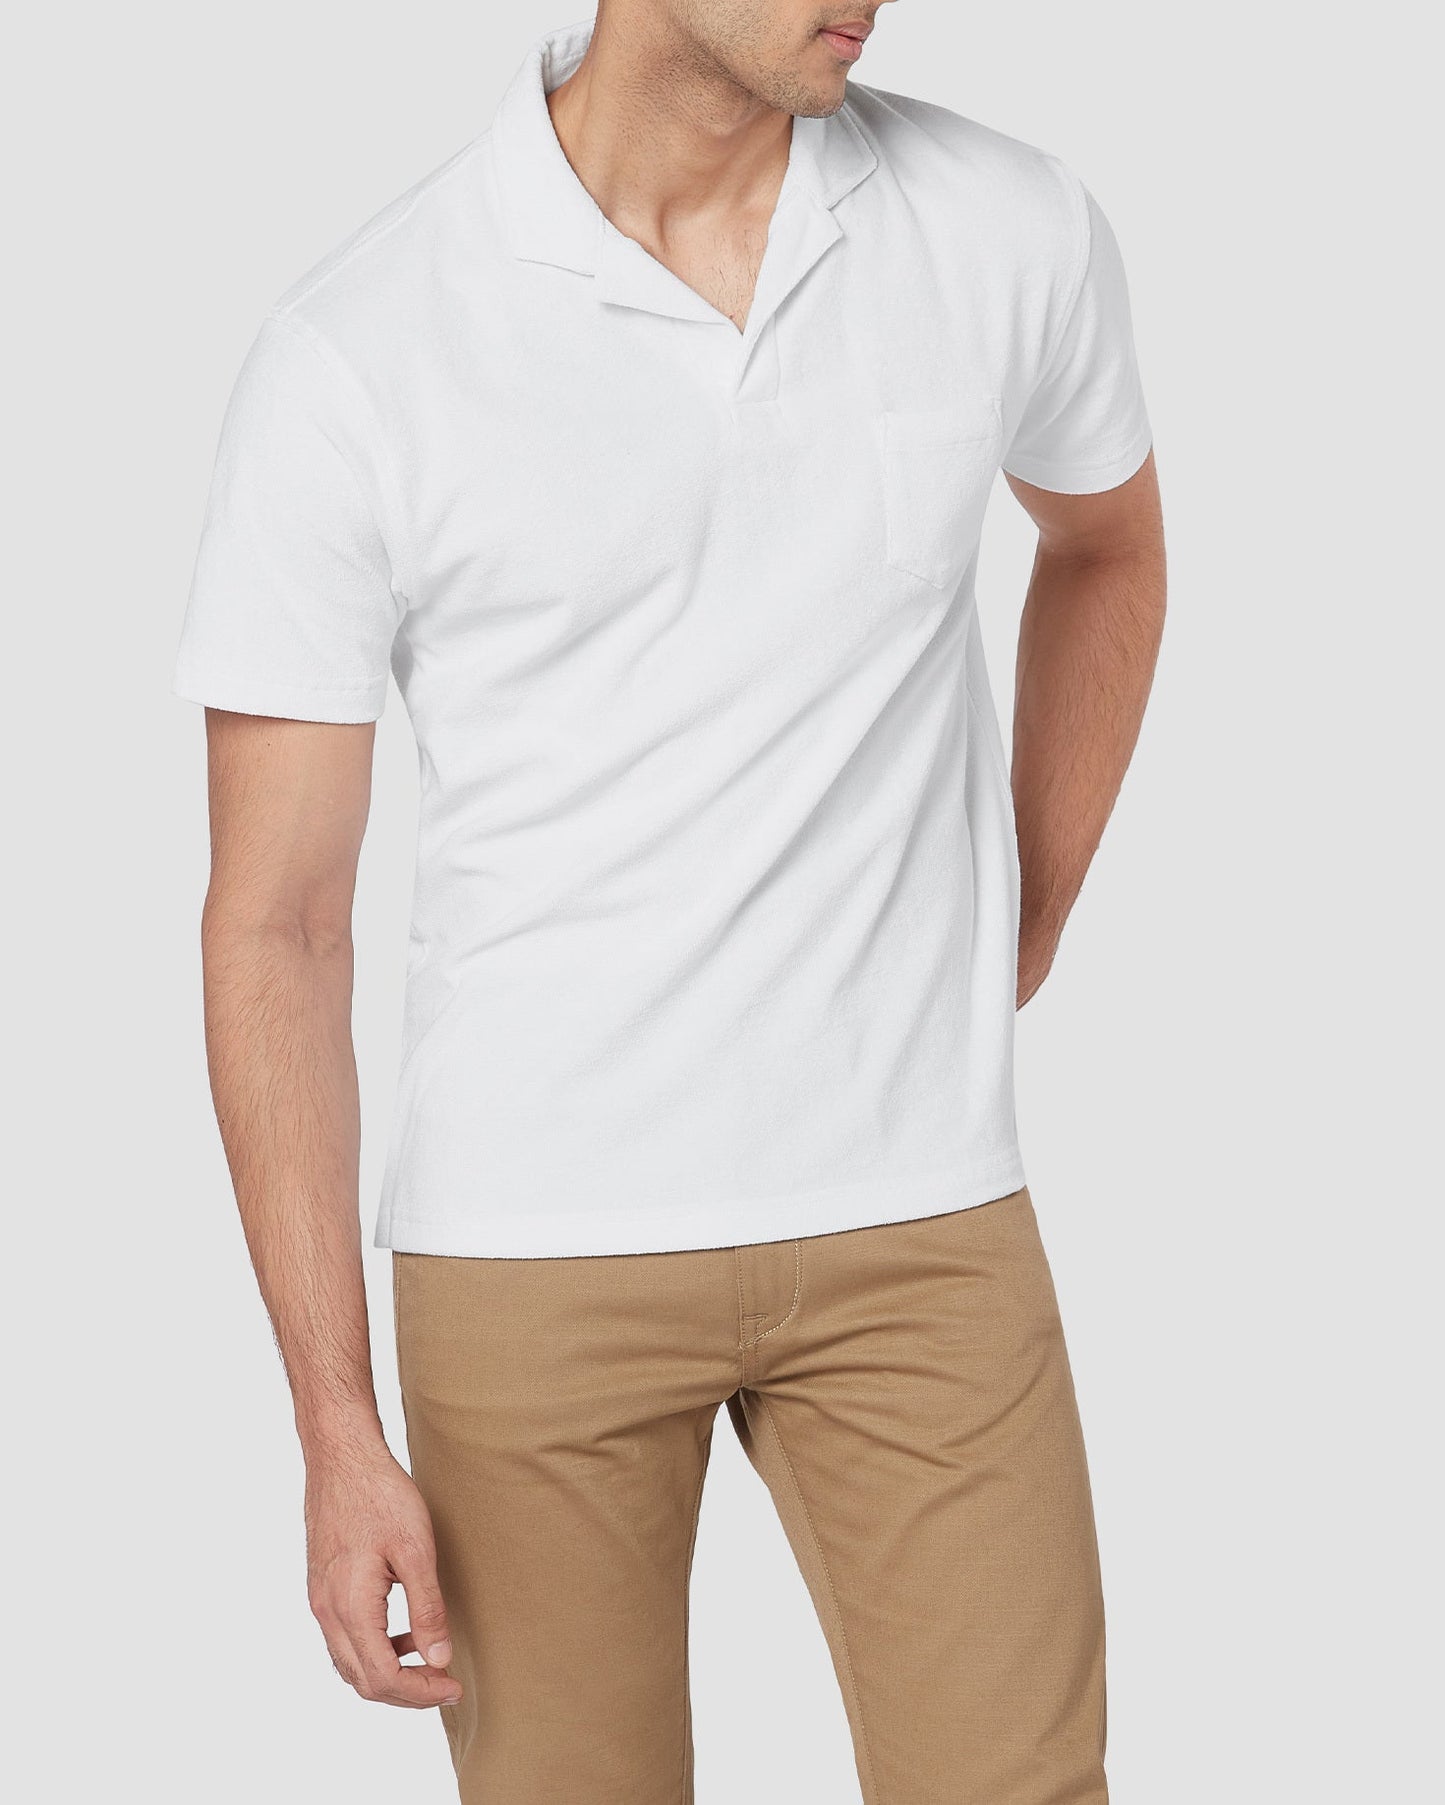 Terry Towel Polo T-Shirt - White